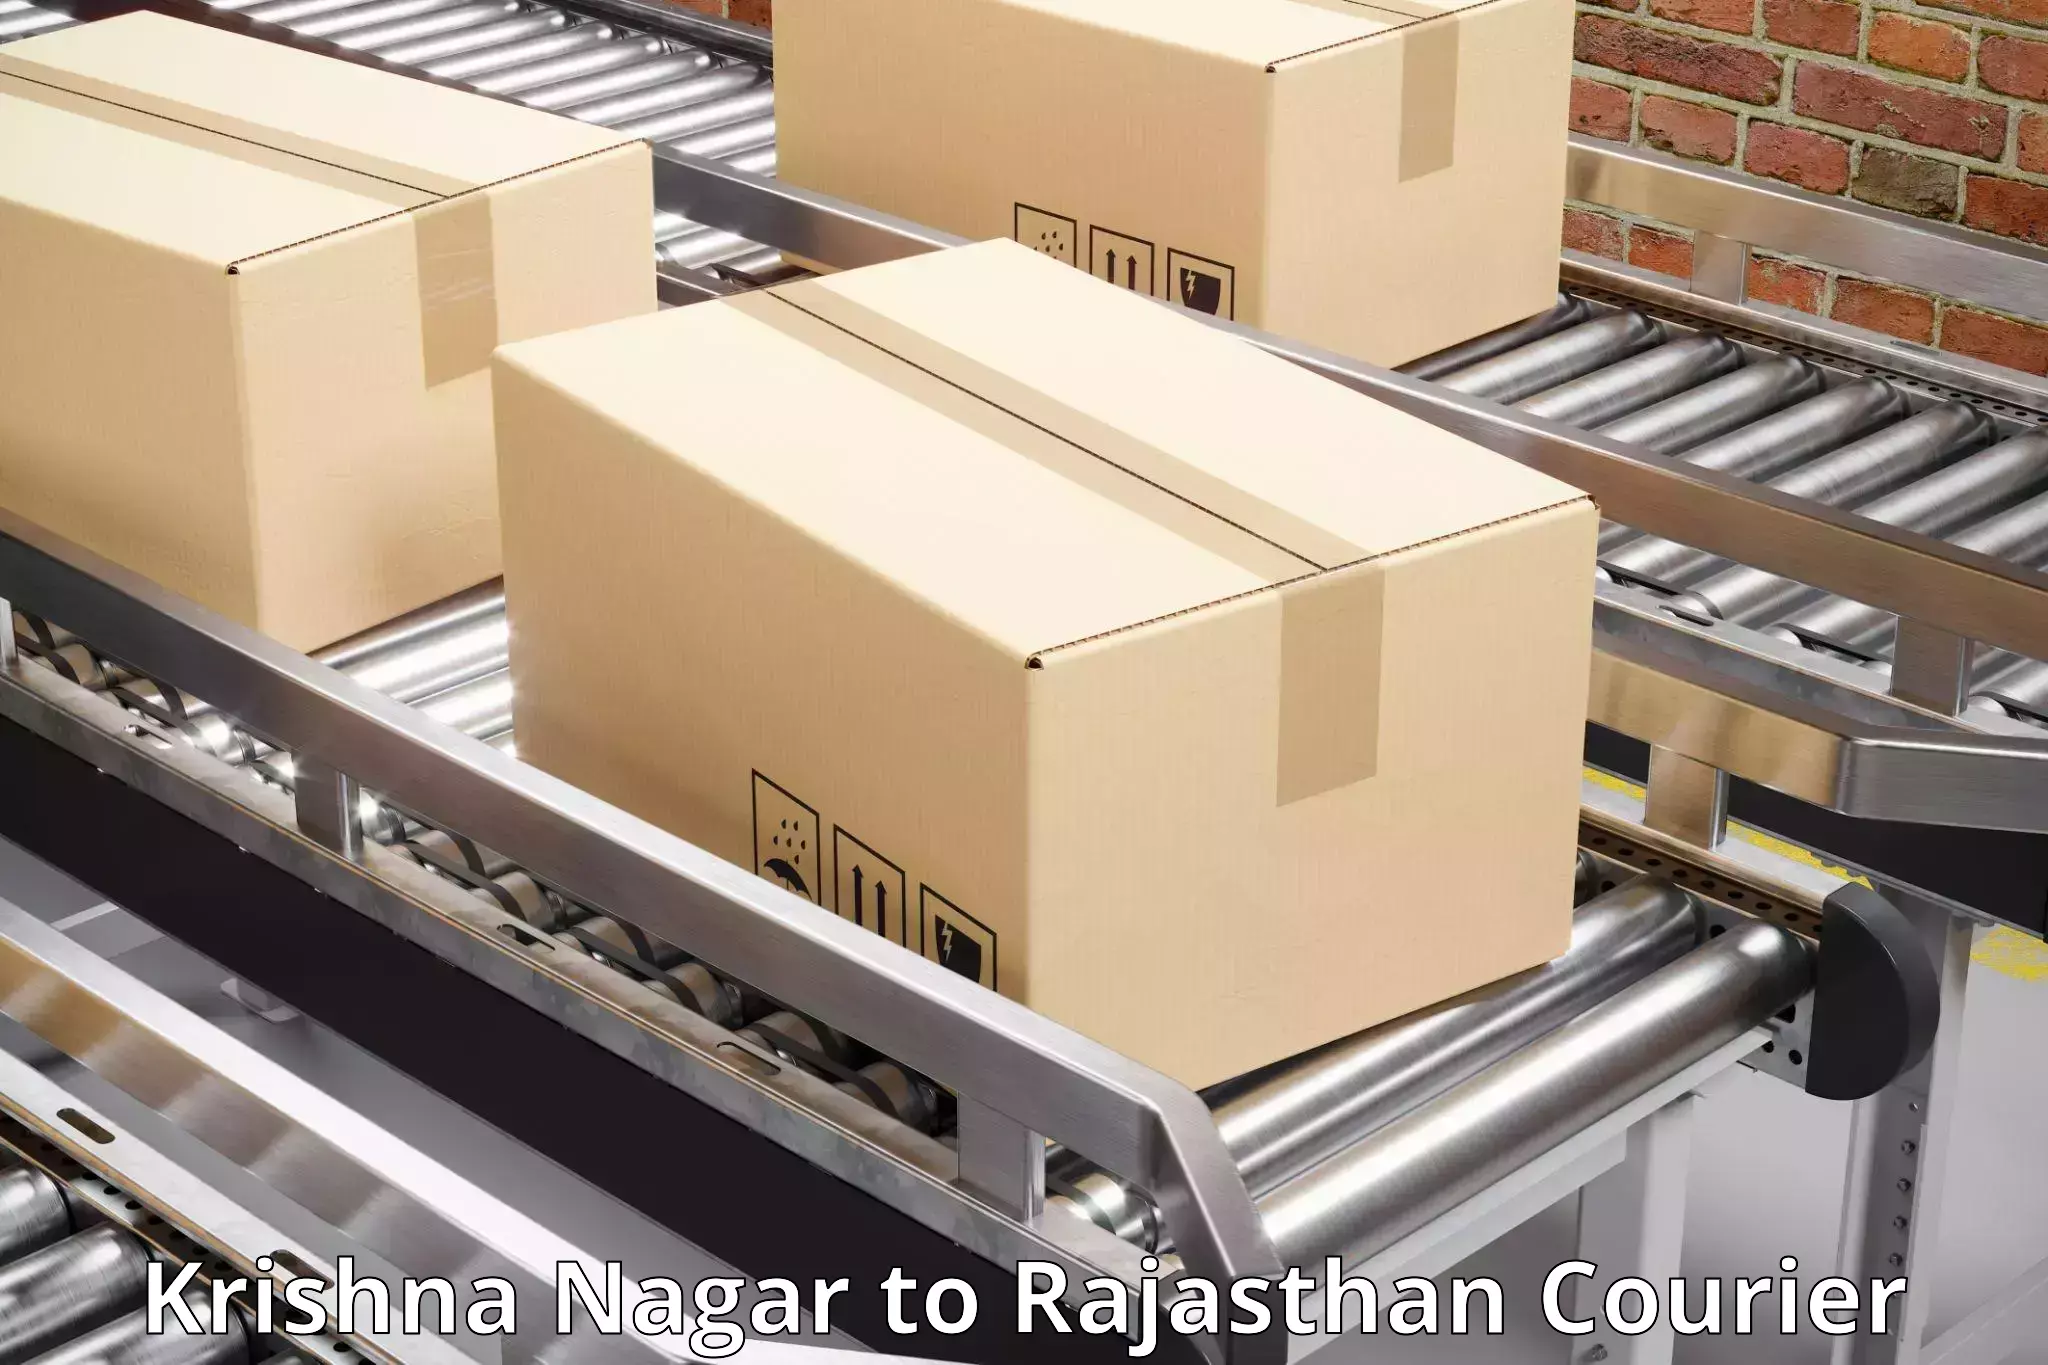 Global shipping networks Krishna Nagar to Alwar